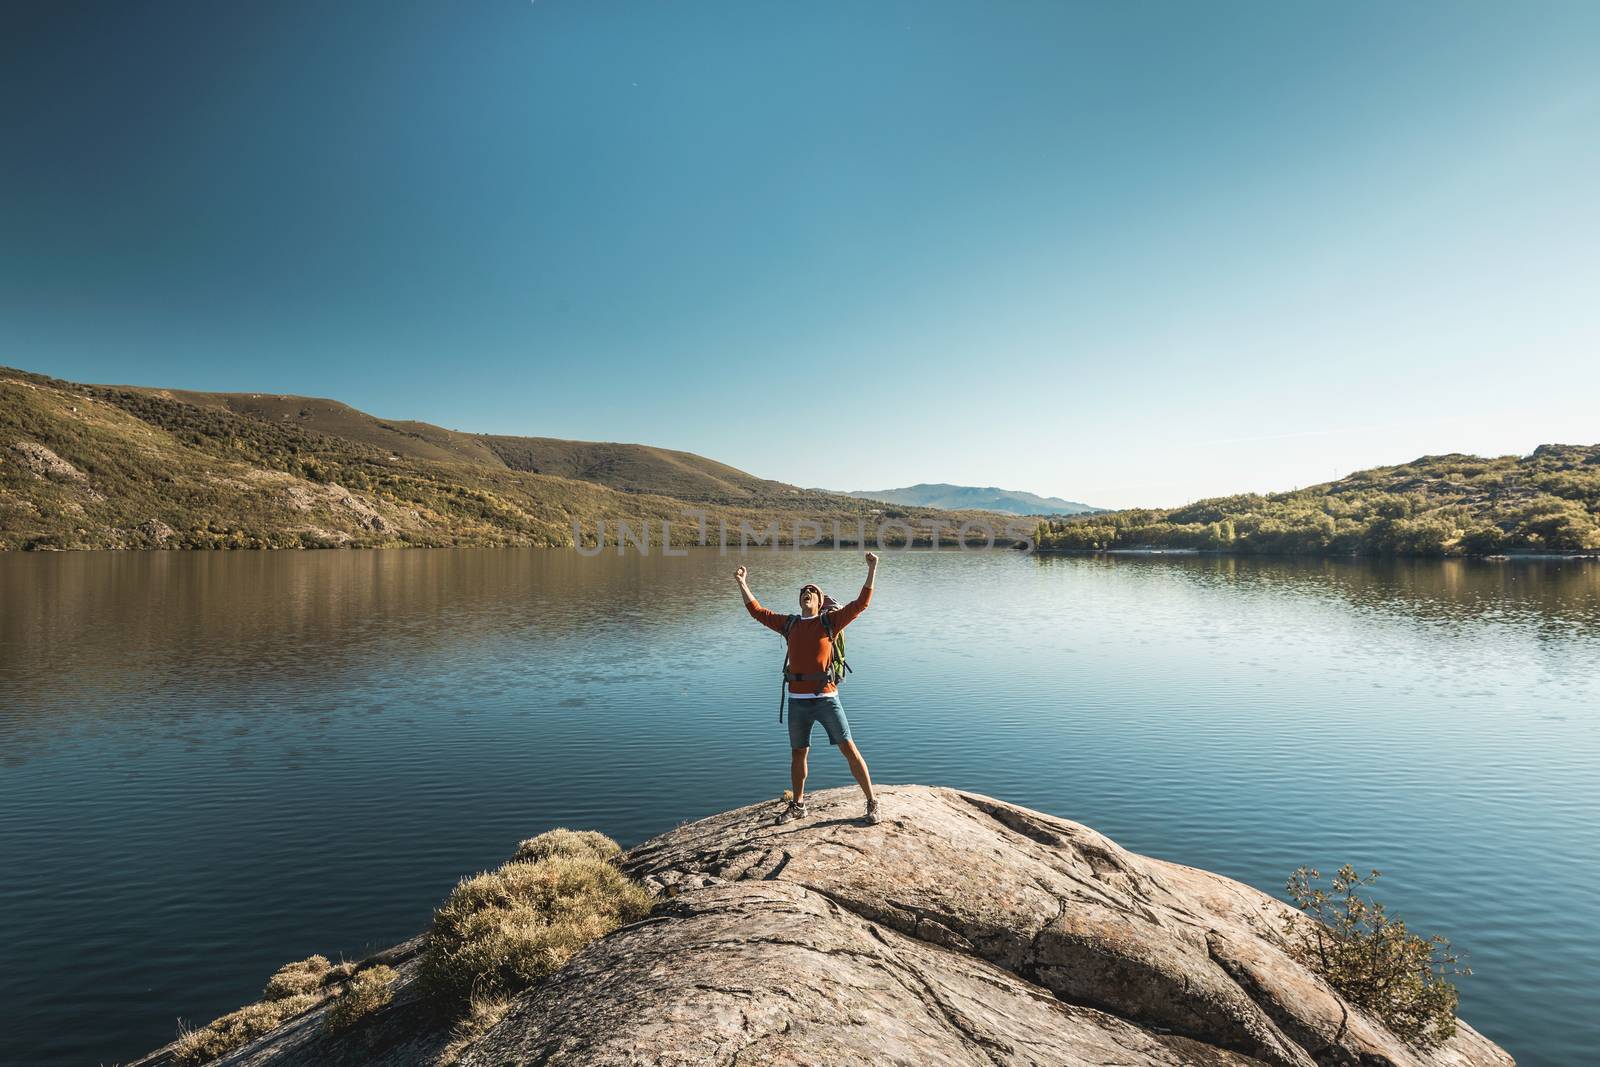 Shot of a man hiking near a beautiful lake with arsm raised